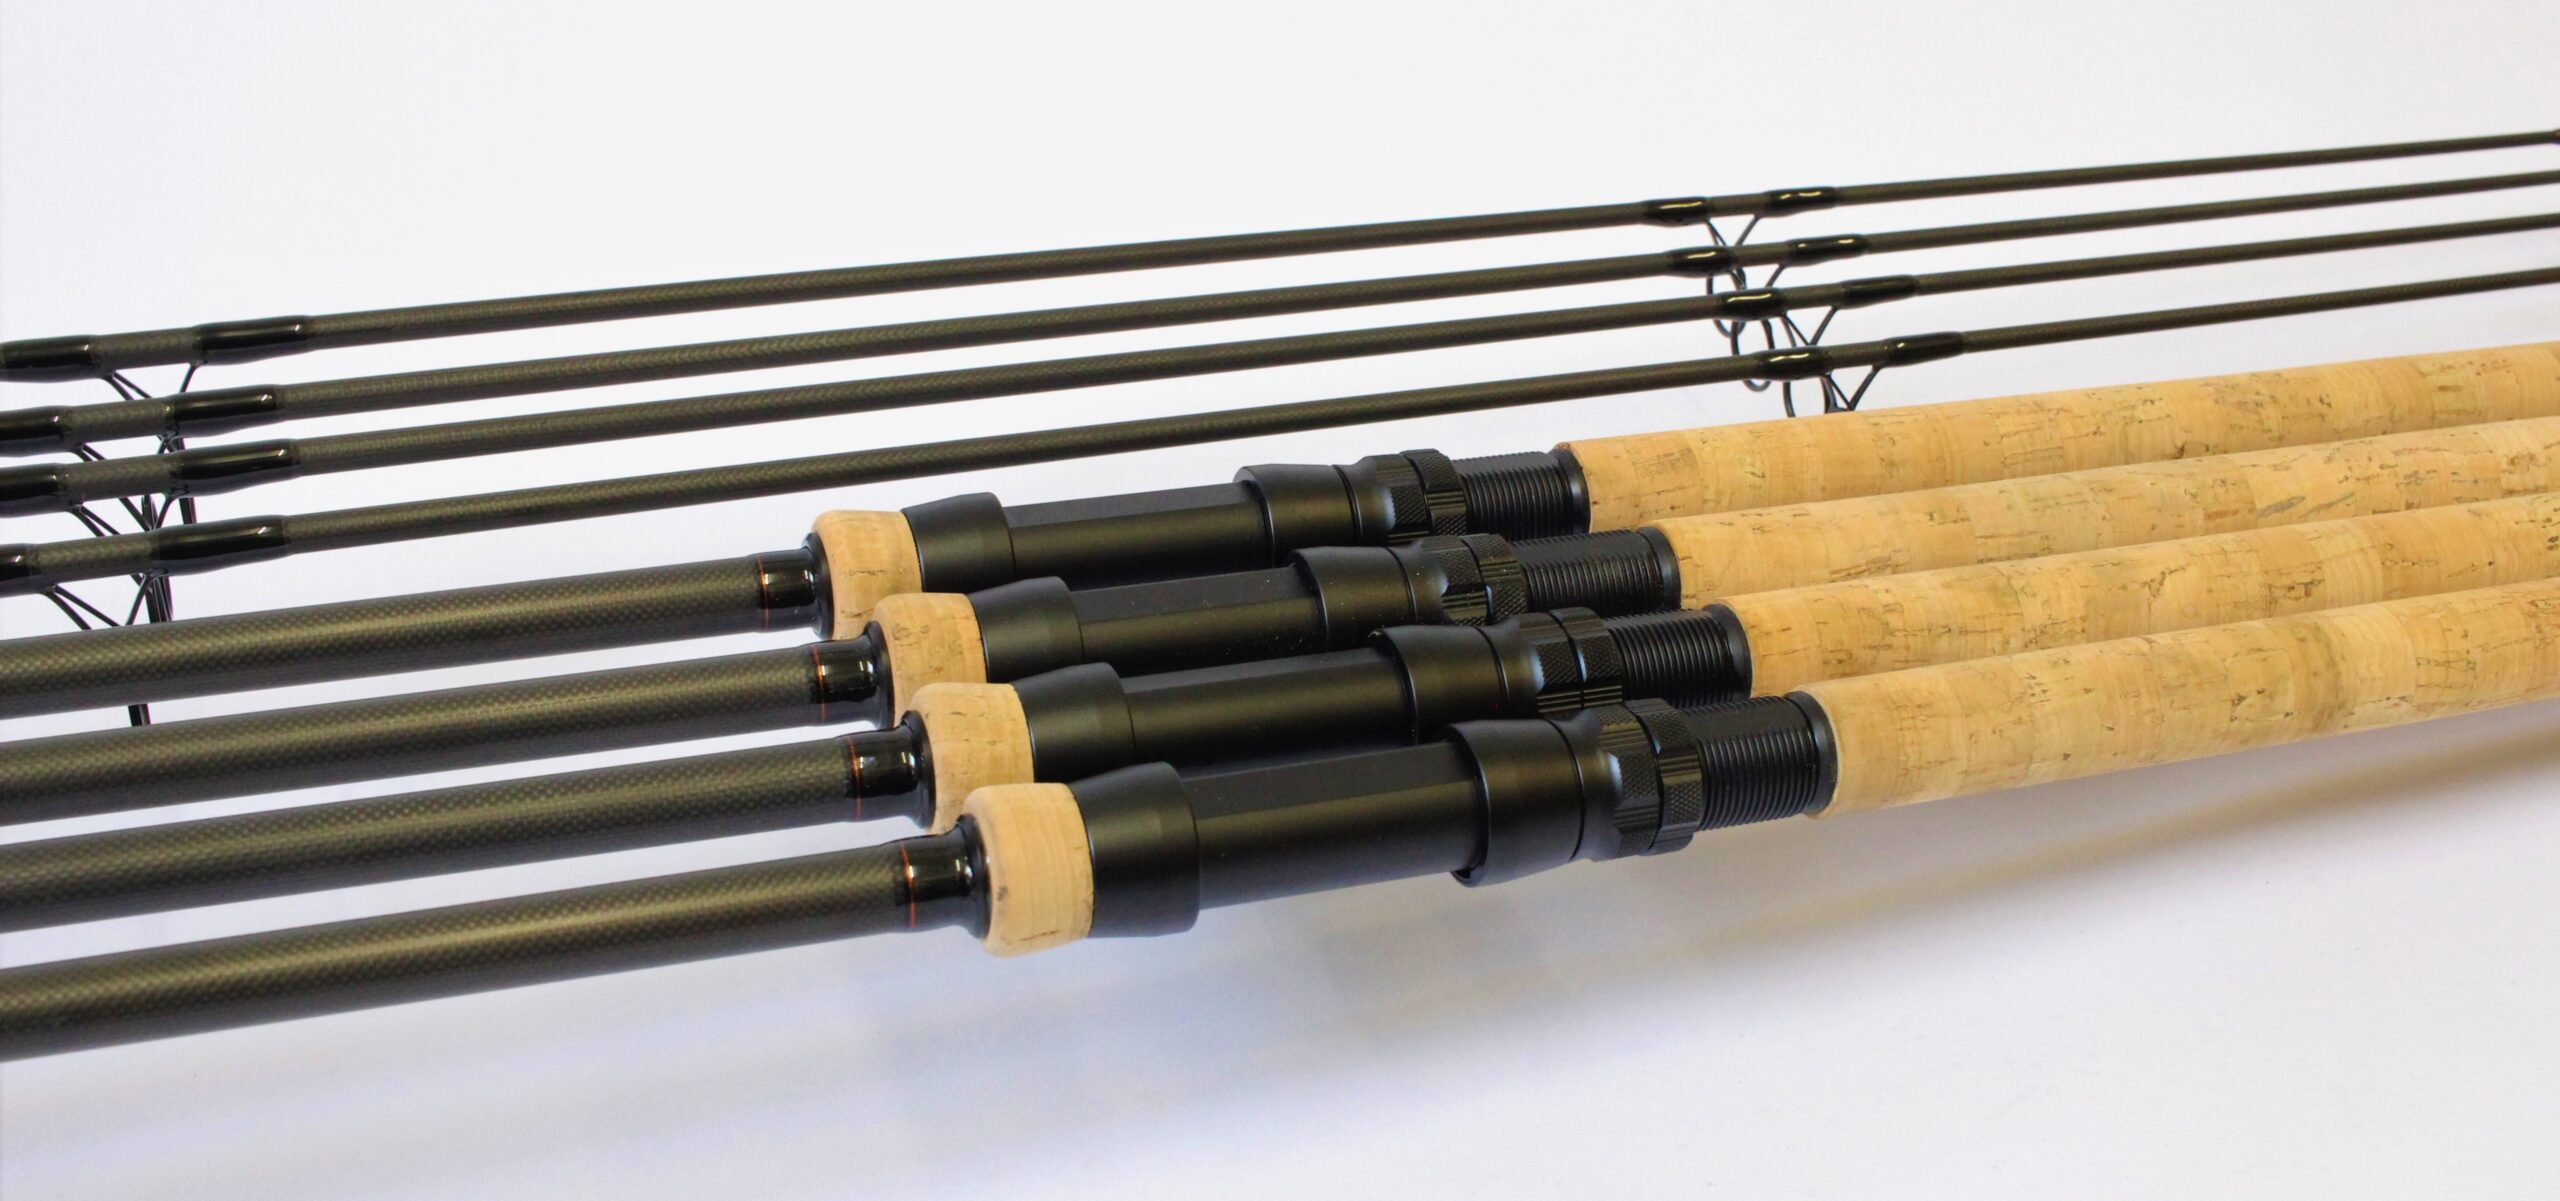 Mnft 1Set Cork Split Grip Rod Handle Kit Baitcast Fishing Rod